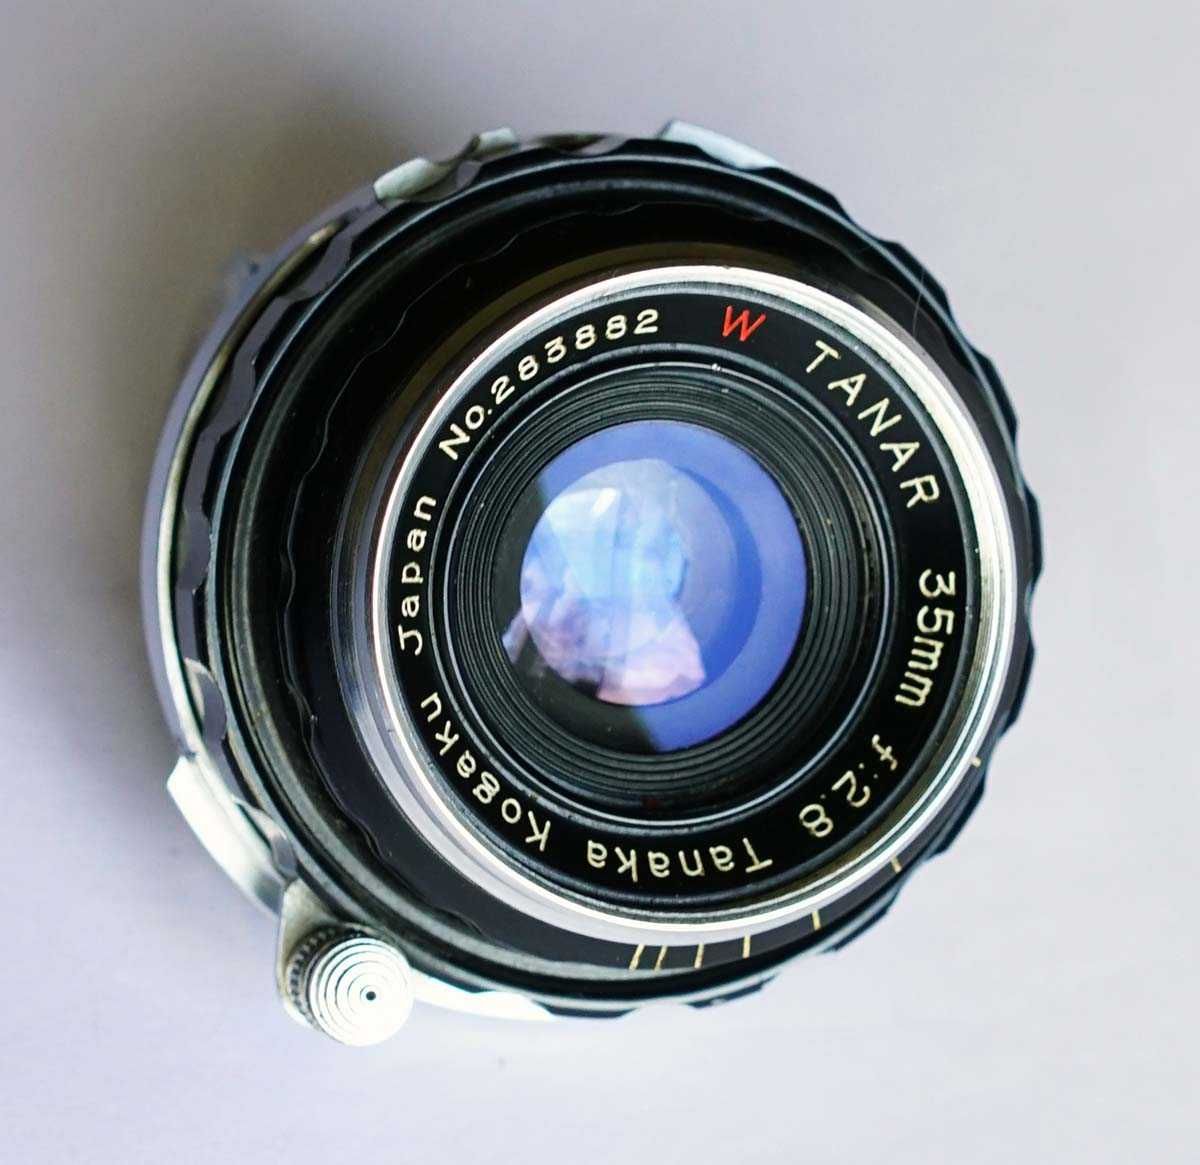 Obiectiv Tanaka Kogaku W Tanar 2.8/35mm, cu adaptor pentru Leica M